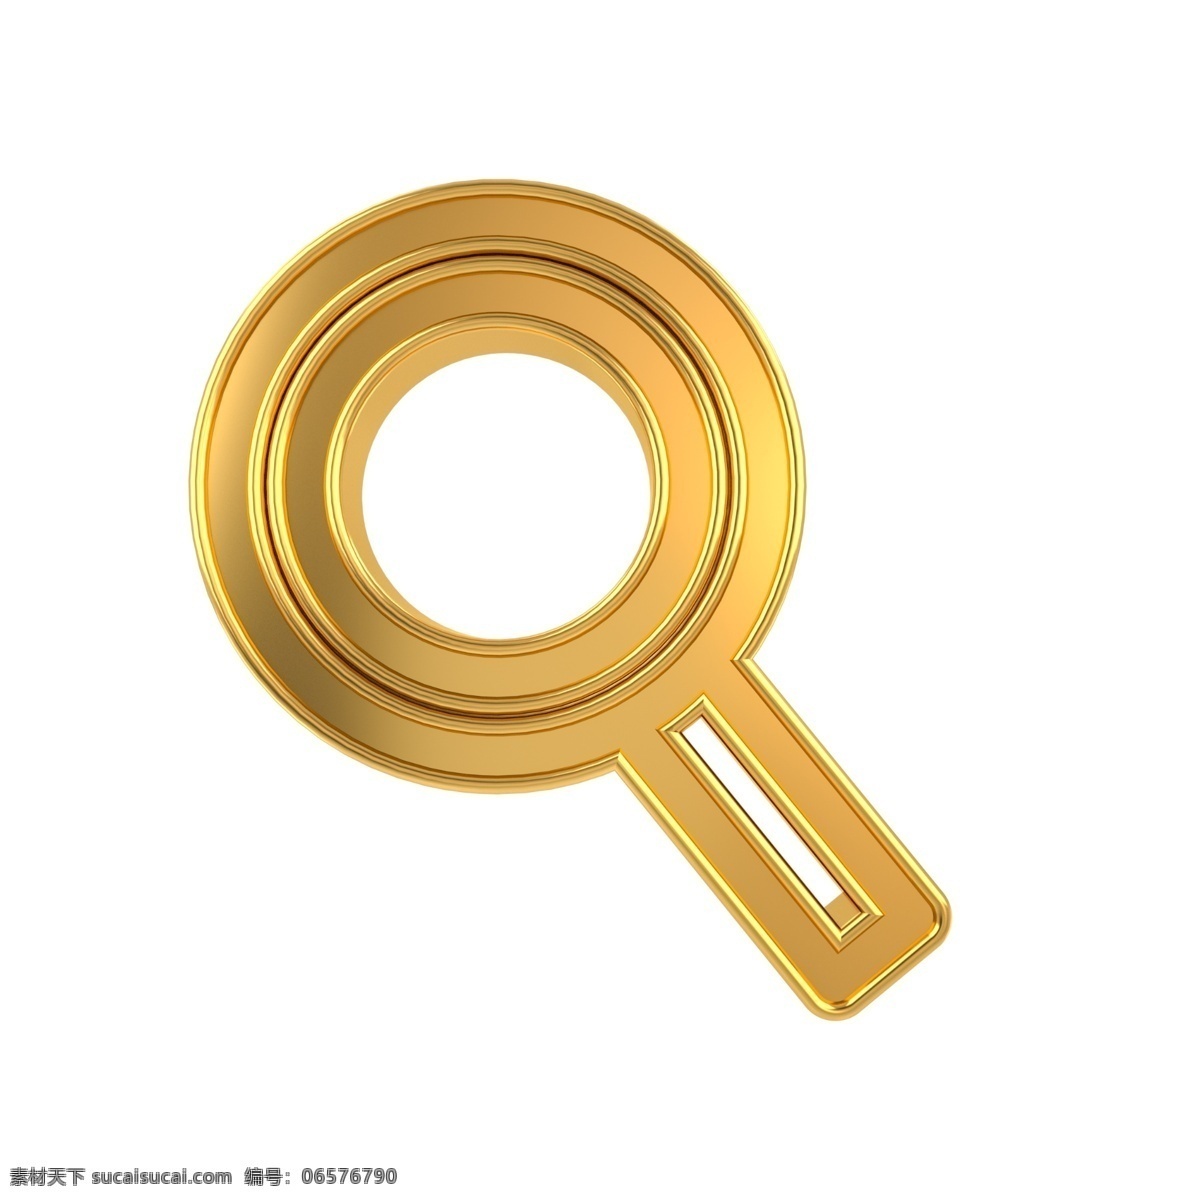 c4d 金属 立体 搜索 图标 3d 金属质感 金色 网页ui 网页设计 常用 搜索图标 放大镜